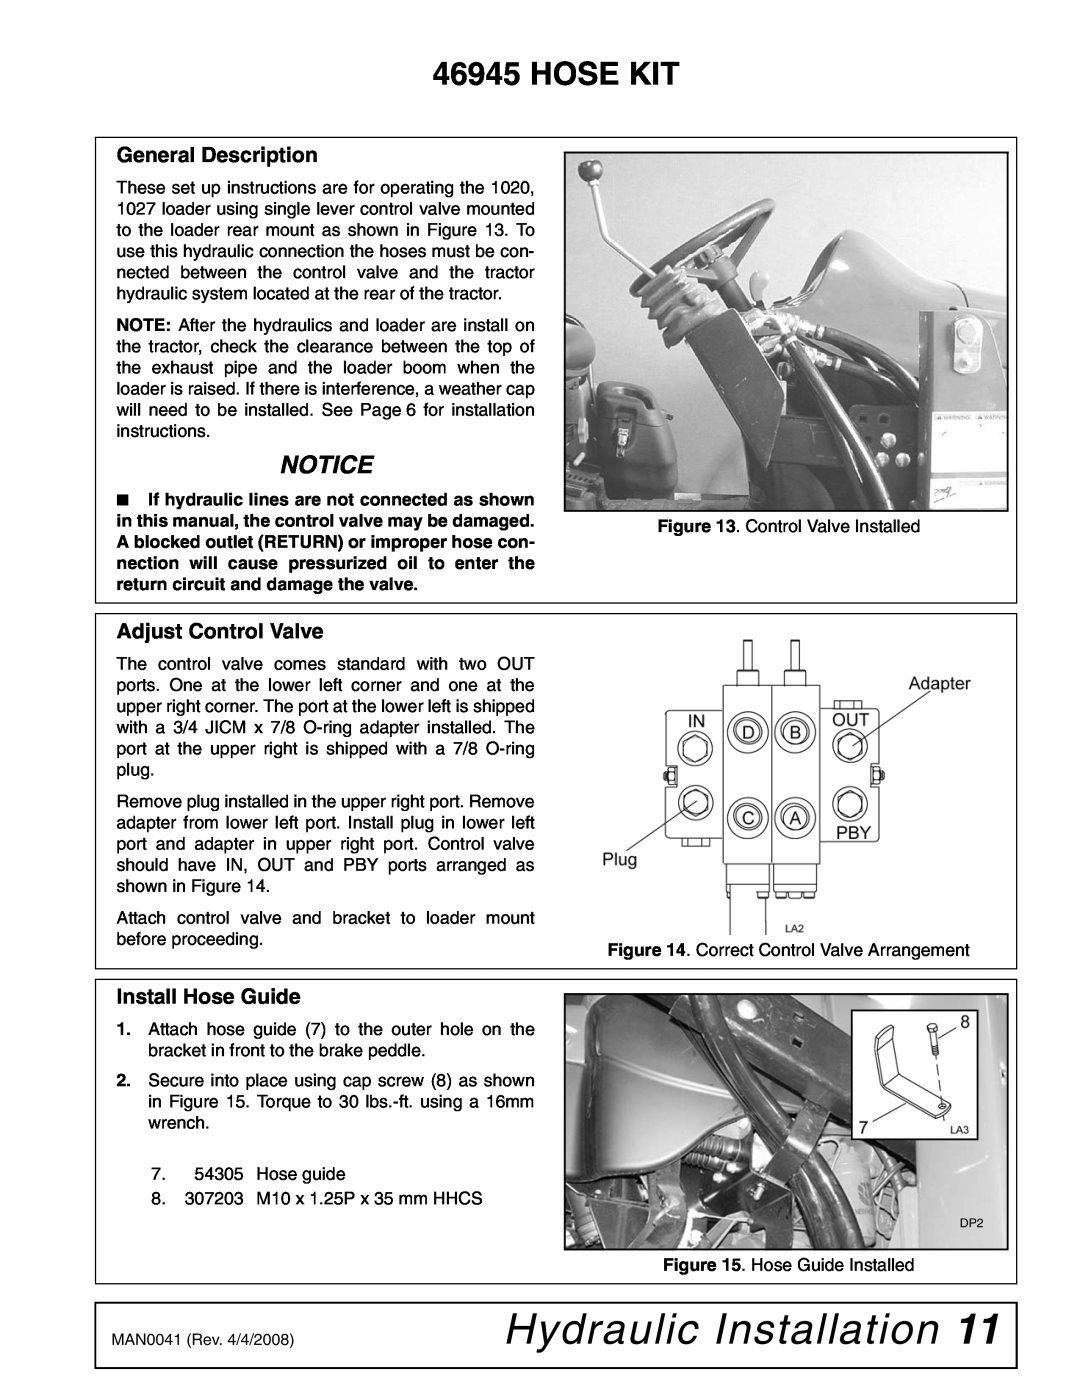 Woods Equipment LU126 Hydraulic Installation, Hose Kit, General Description, Adjust Control Valve, Install Hose Guide 